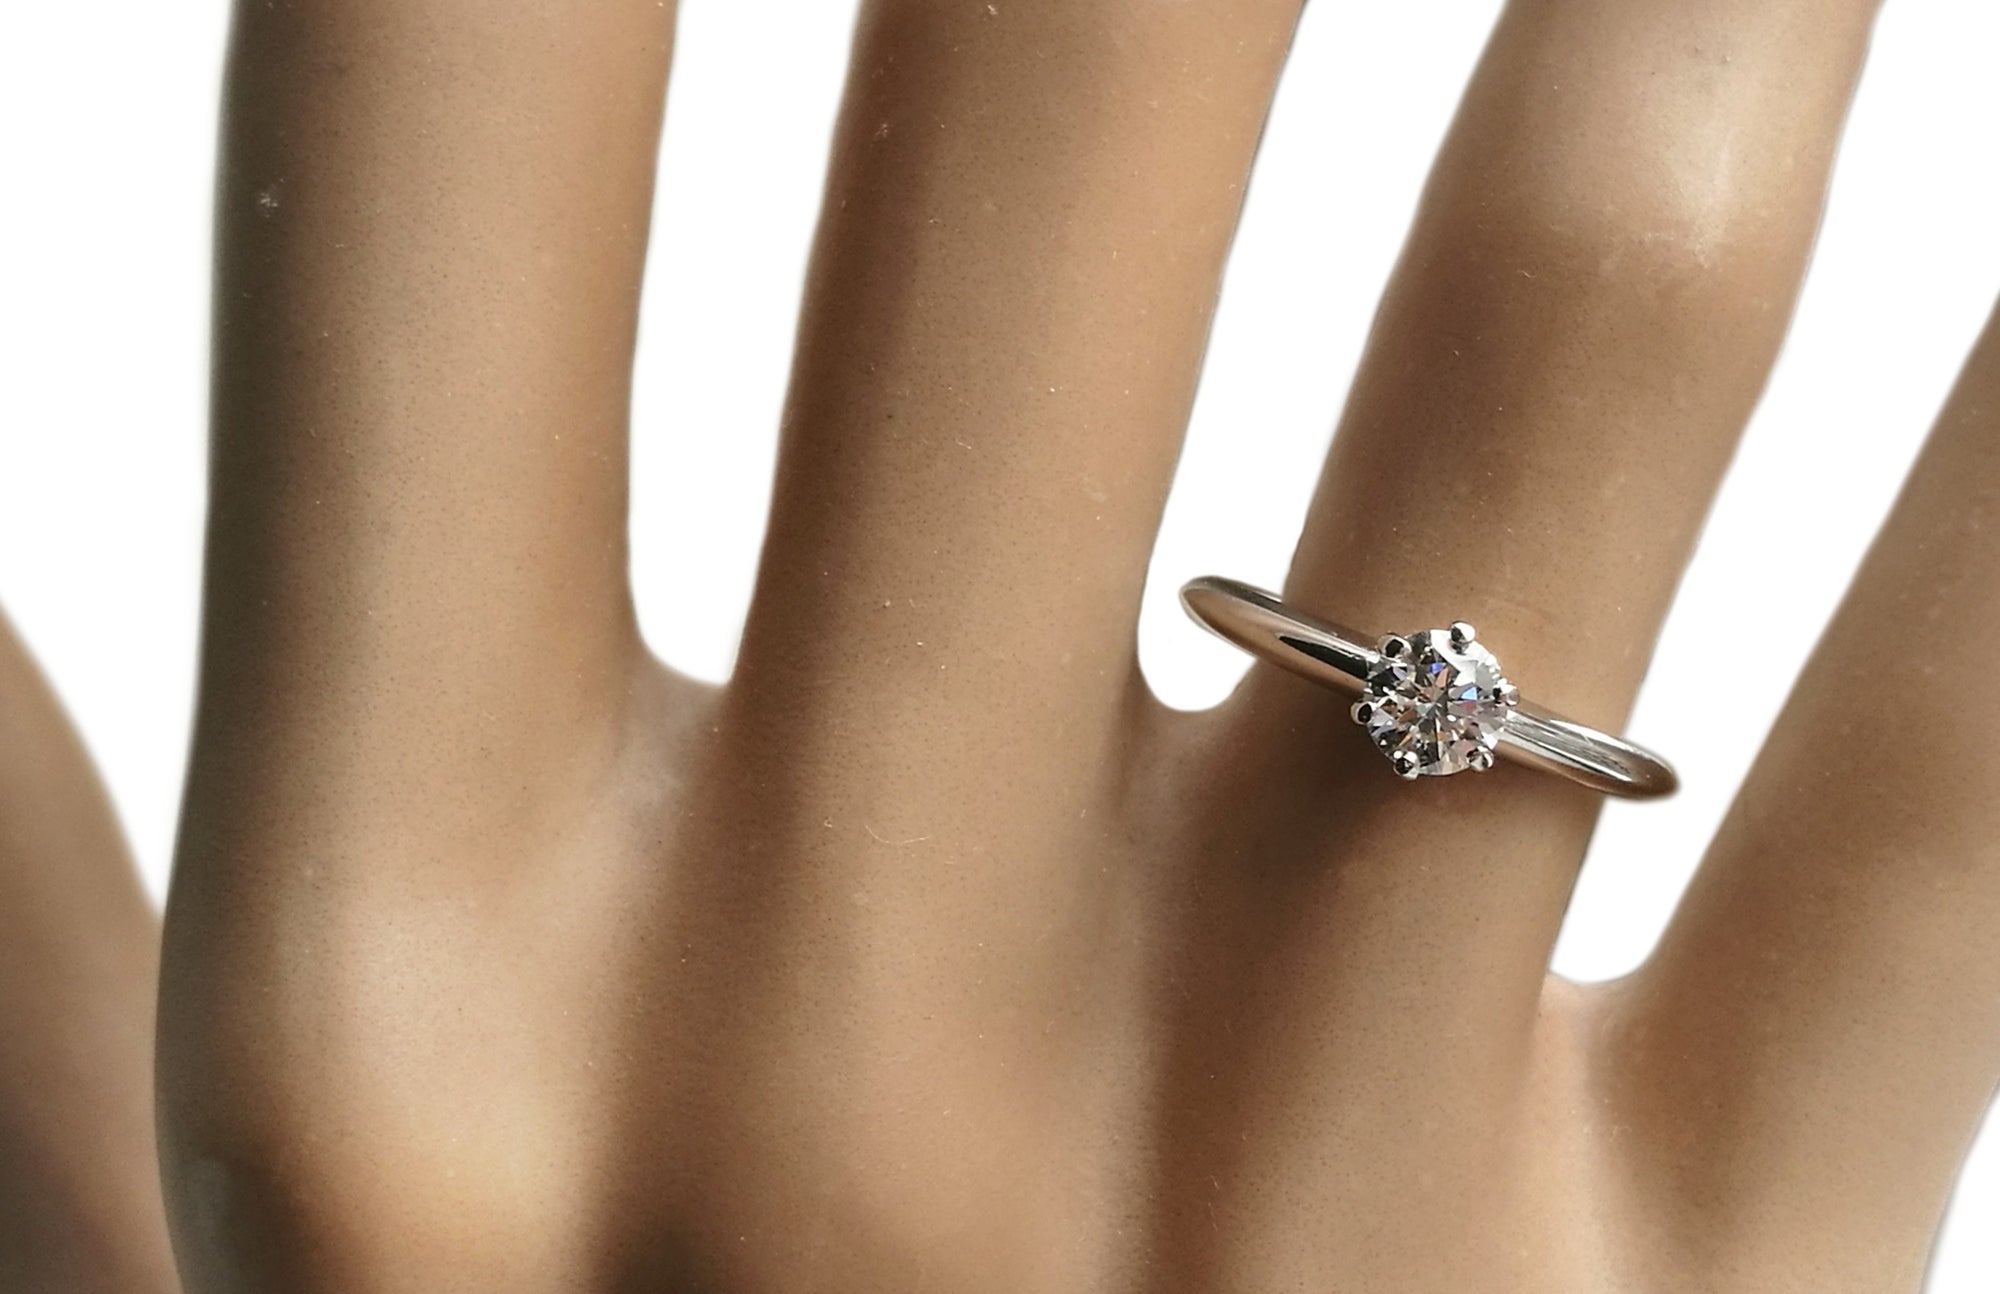  Tiffany® Setting Brilliant Cut Diamond Engagement Ring on hand